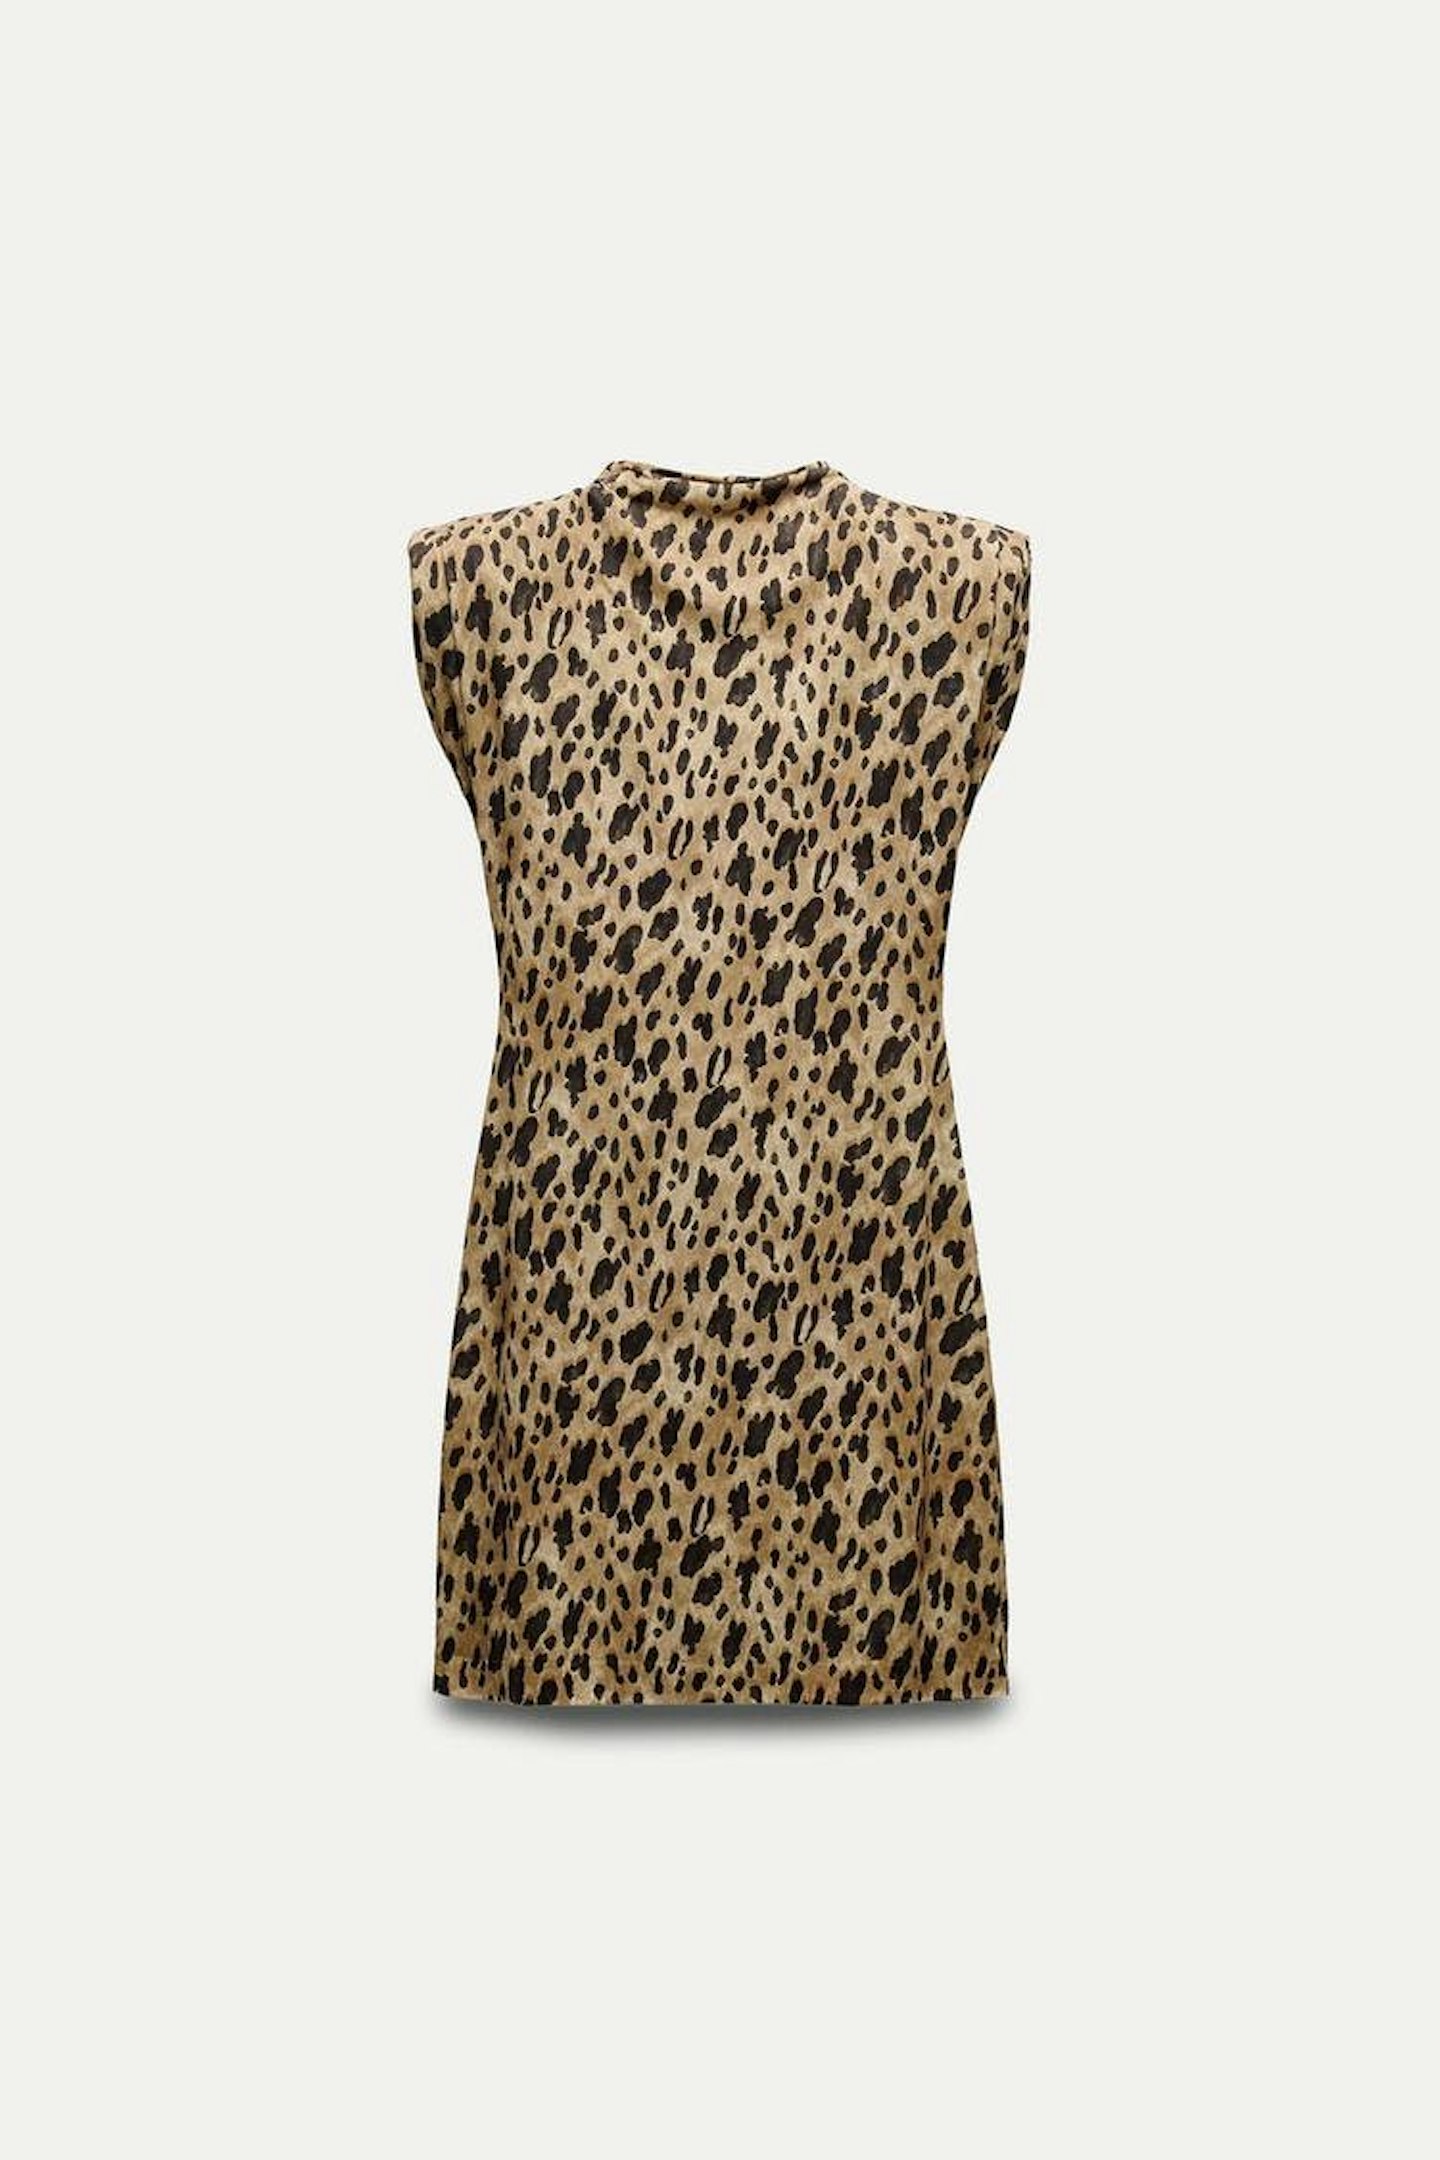 Zara Animal Print Dress